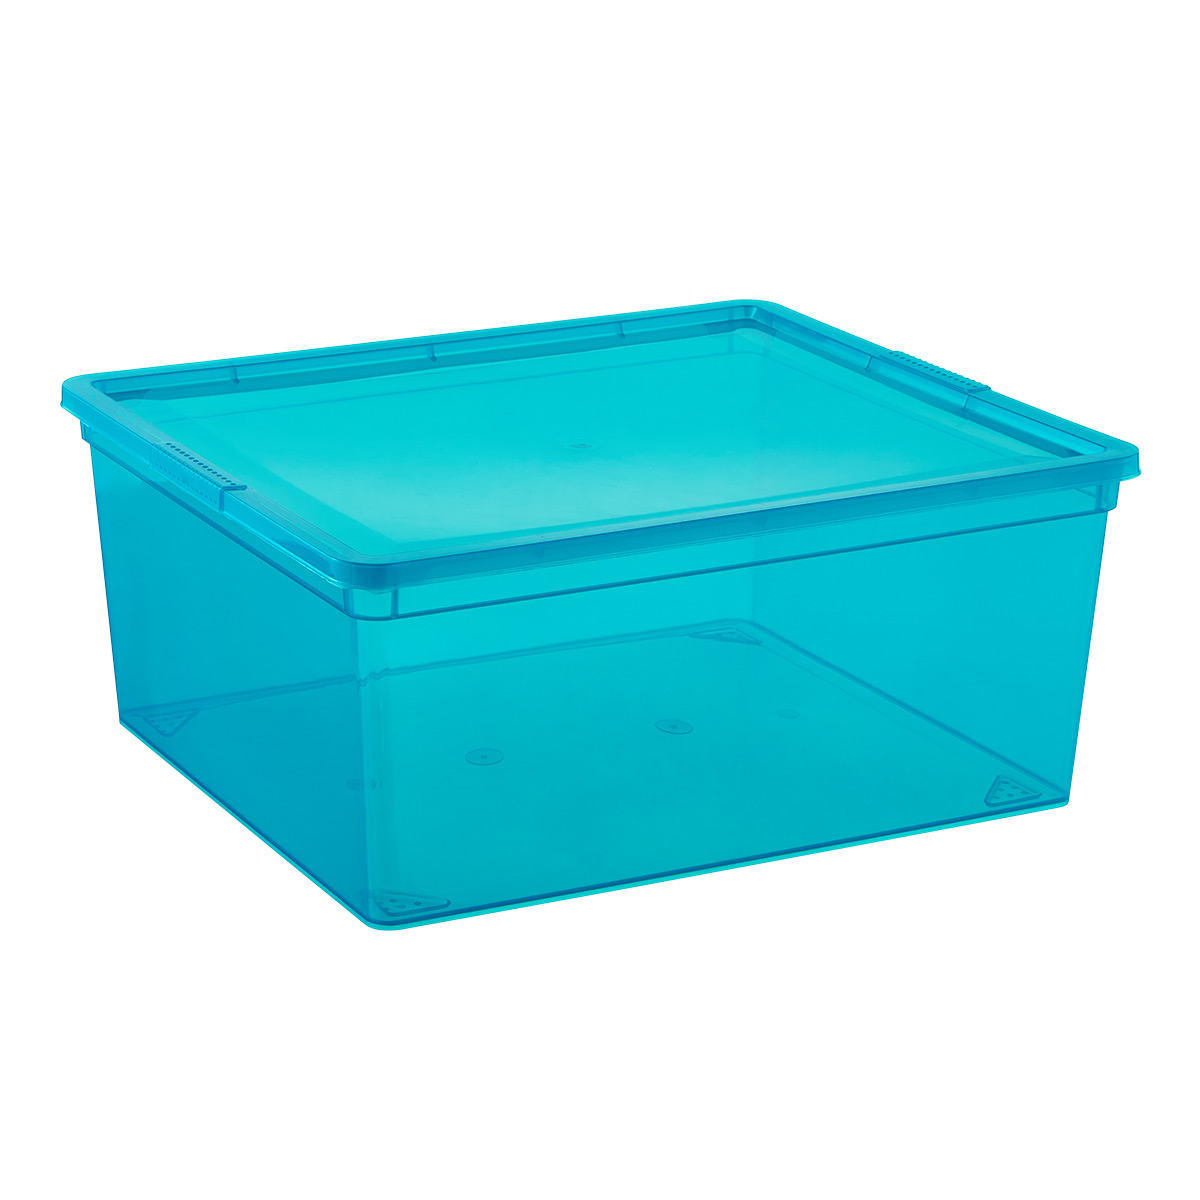 OEMVALATY Plastic Storage Bins,84 qt. Toy Storage Box and Organizer,Clear Storage Bins for Closet,Plastic Totes with Lids for Storage